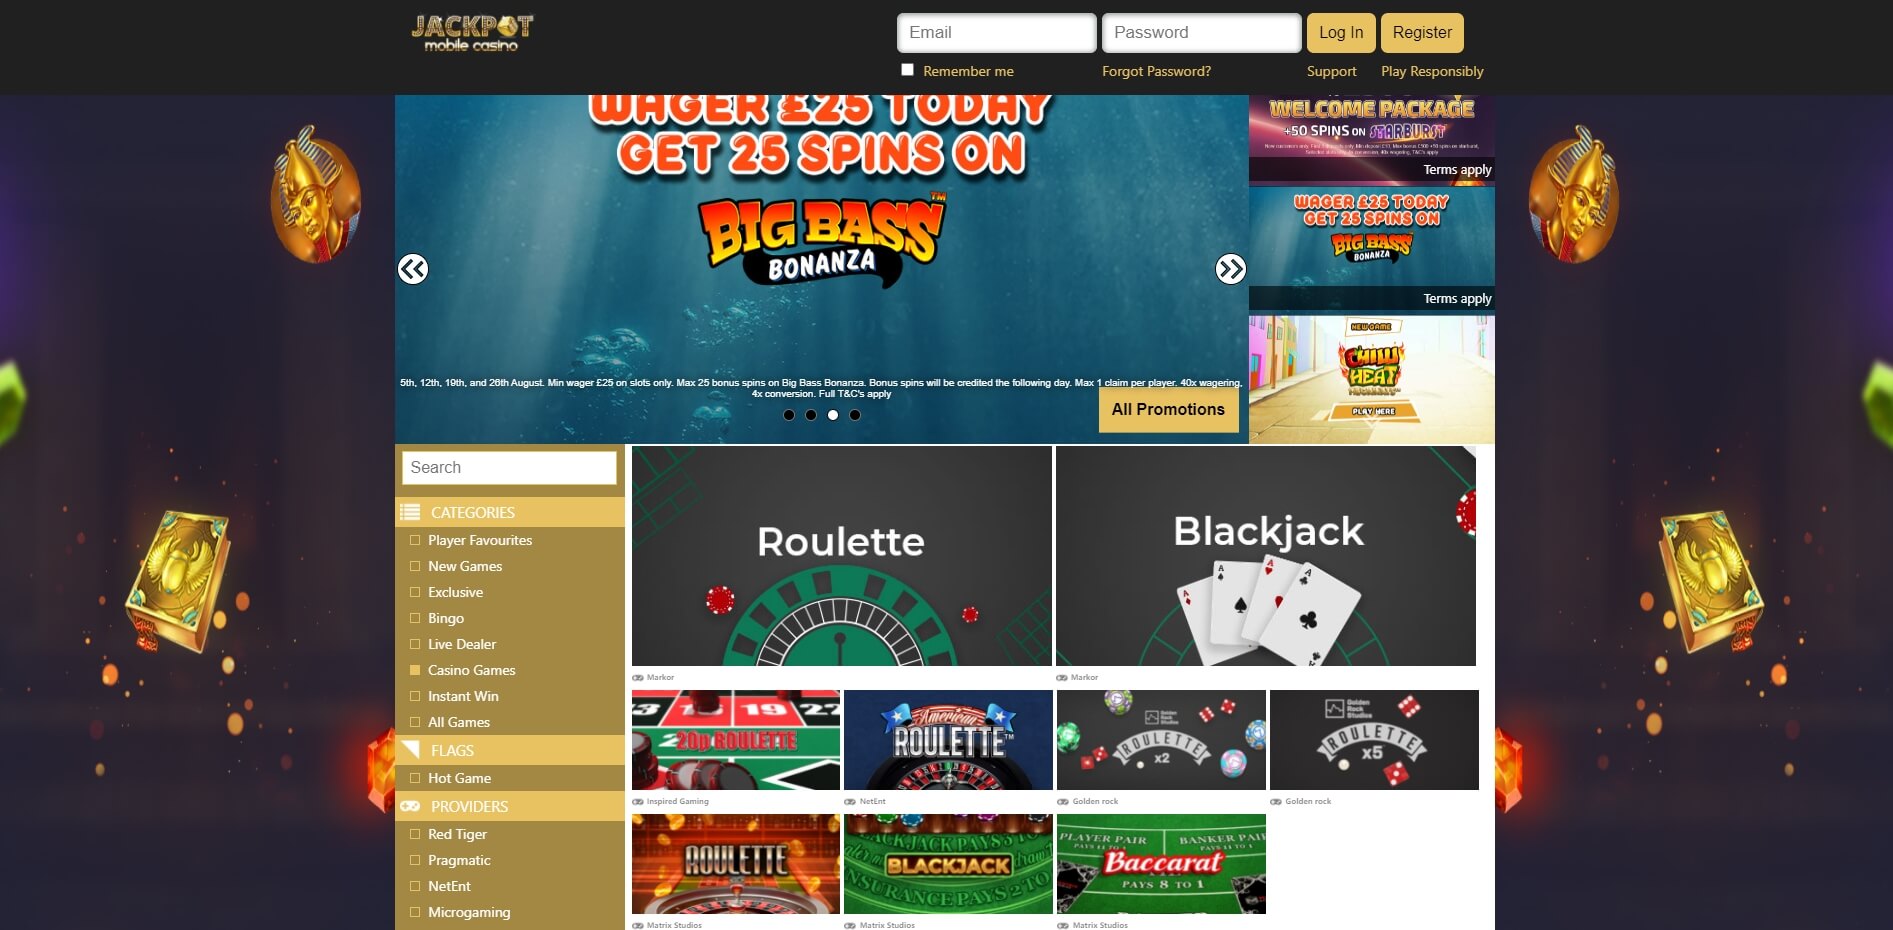 Jackpot mobile casino